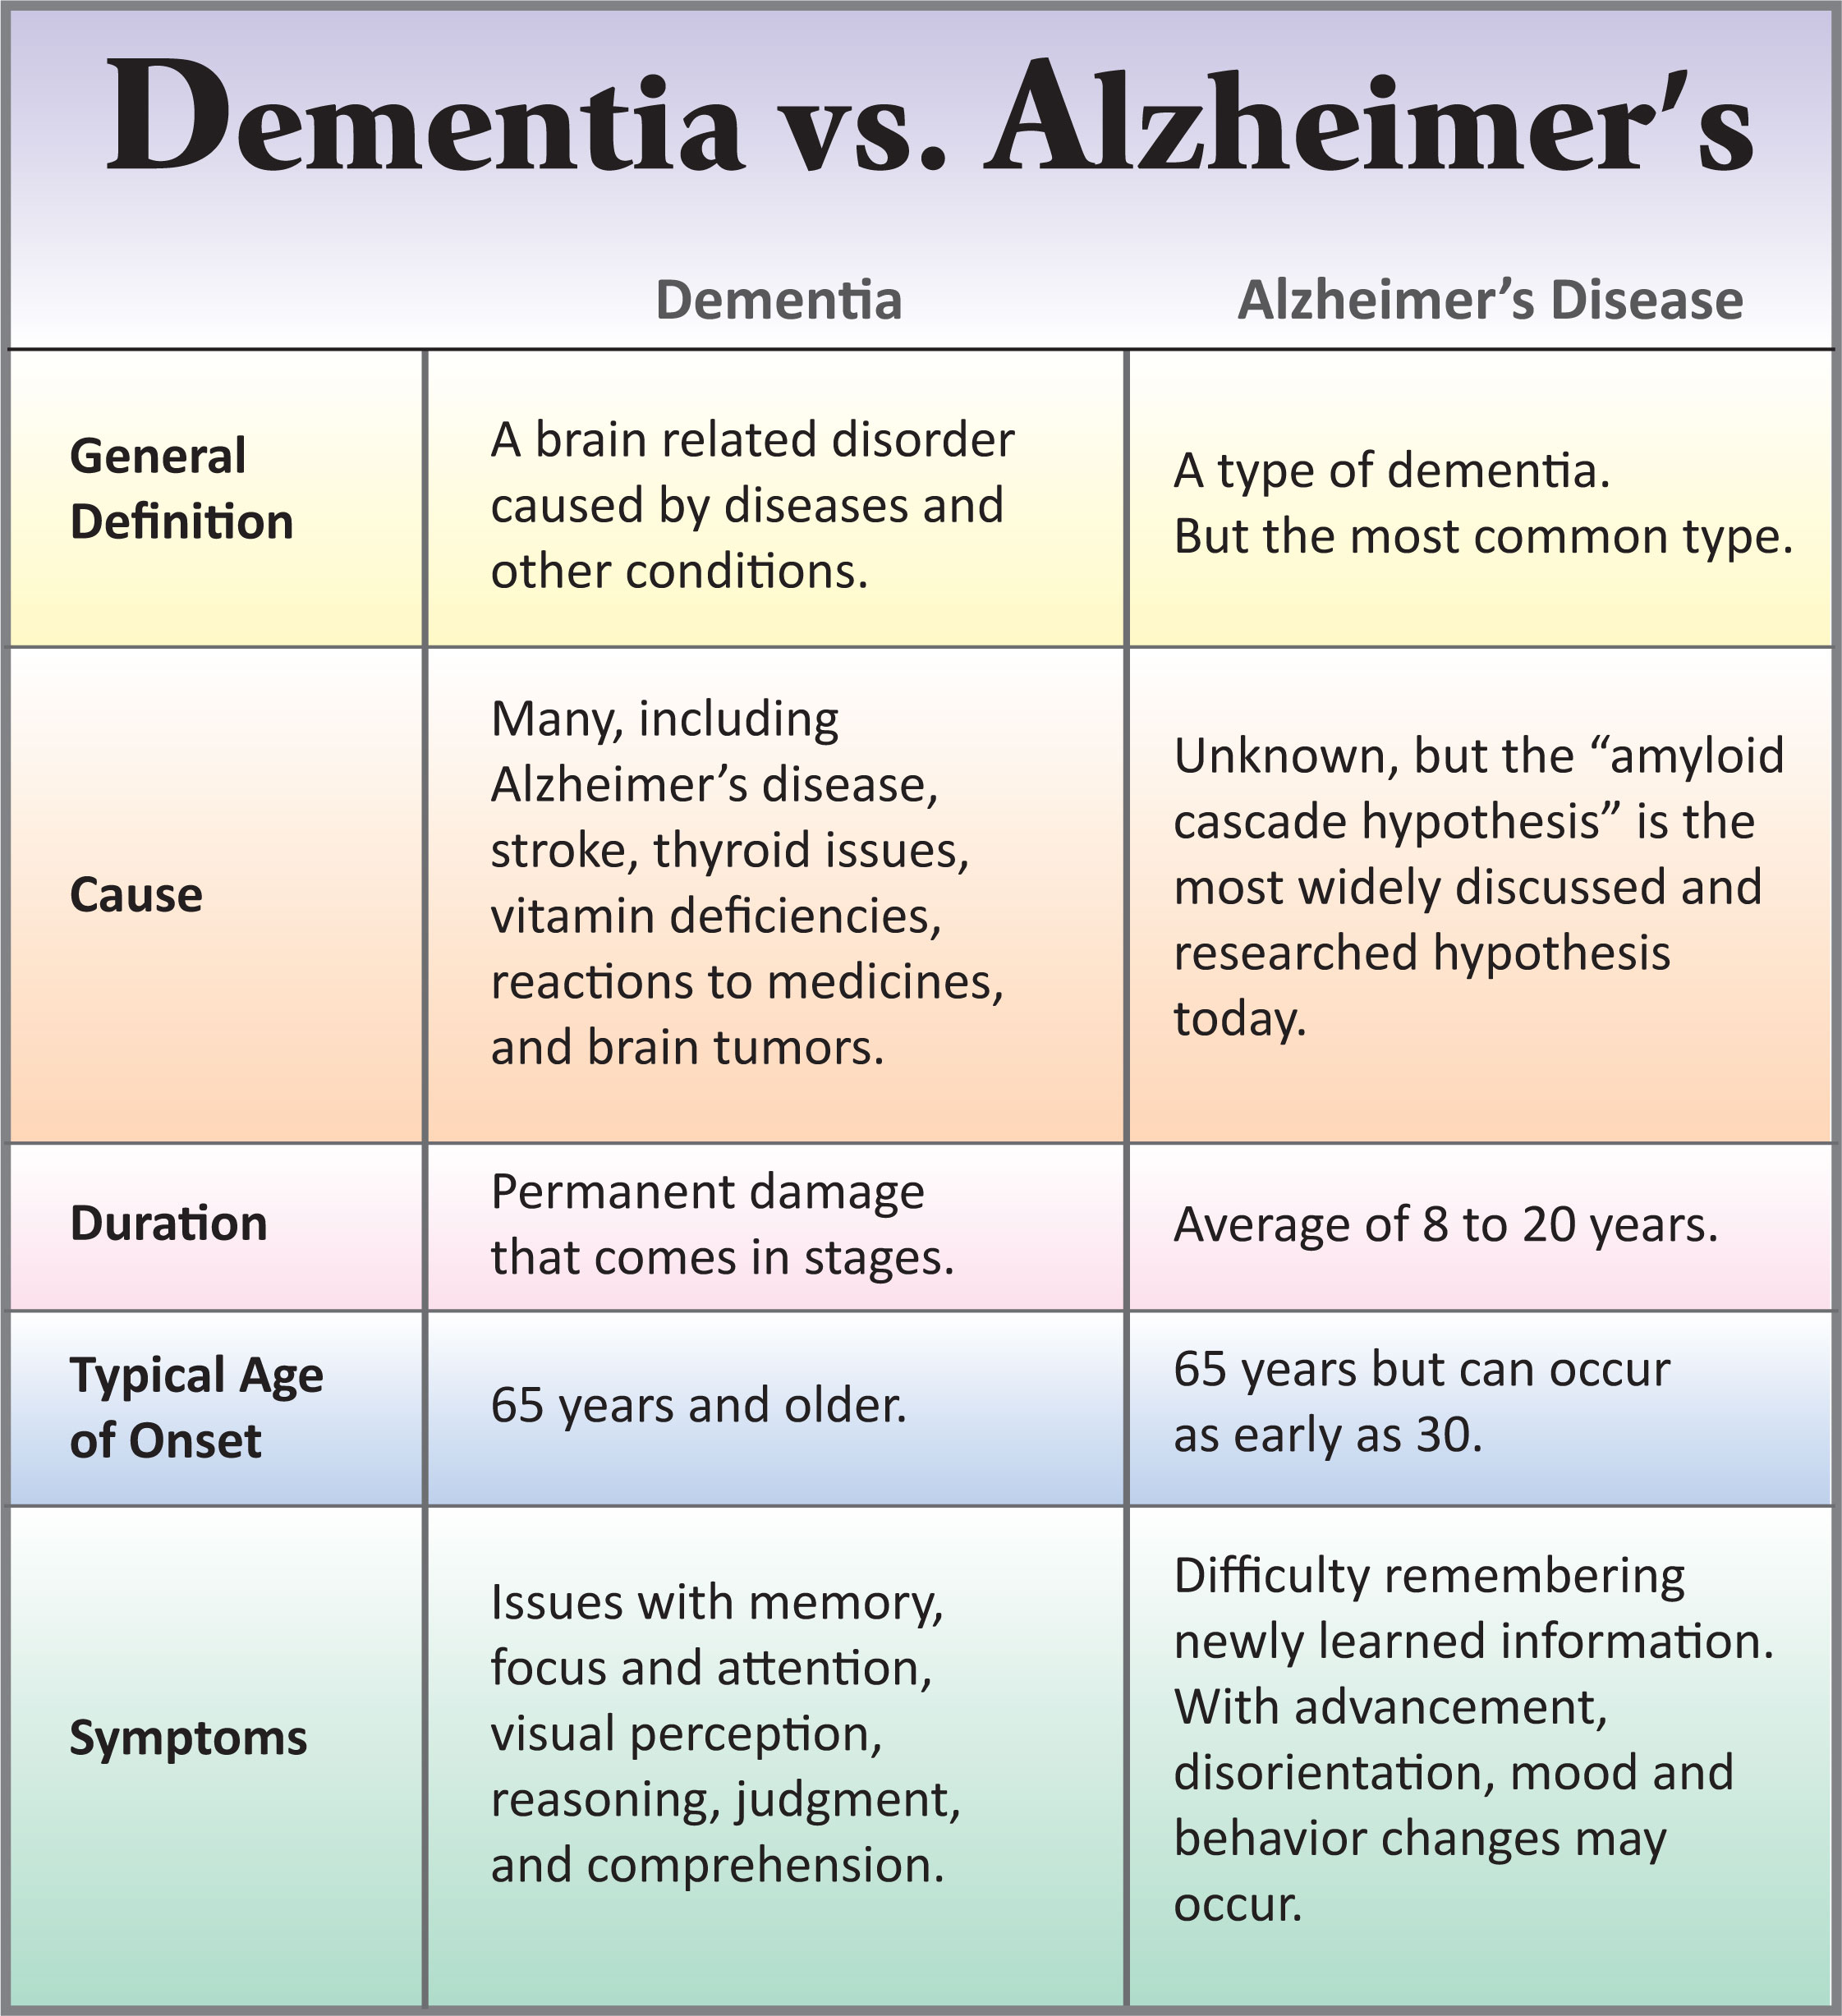 Alzheimer s A Progressive Disease